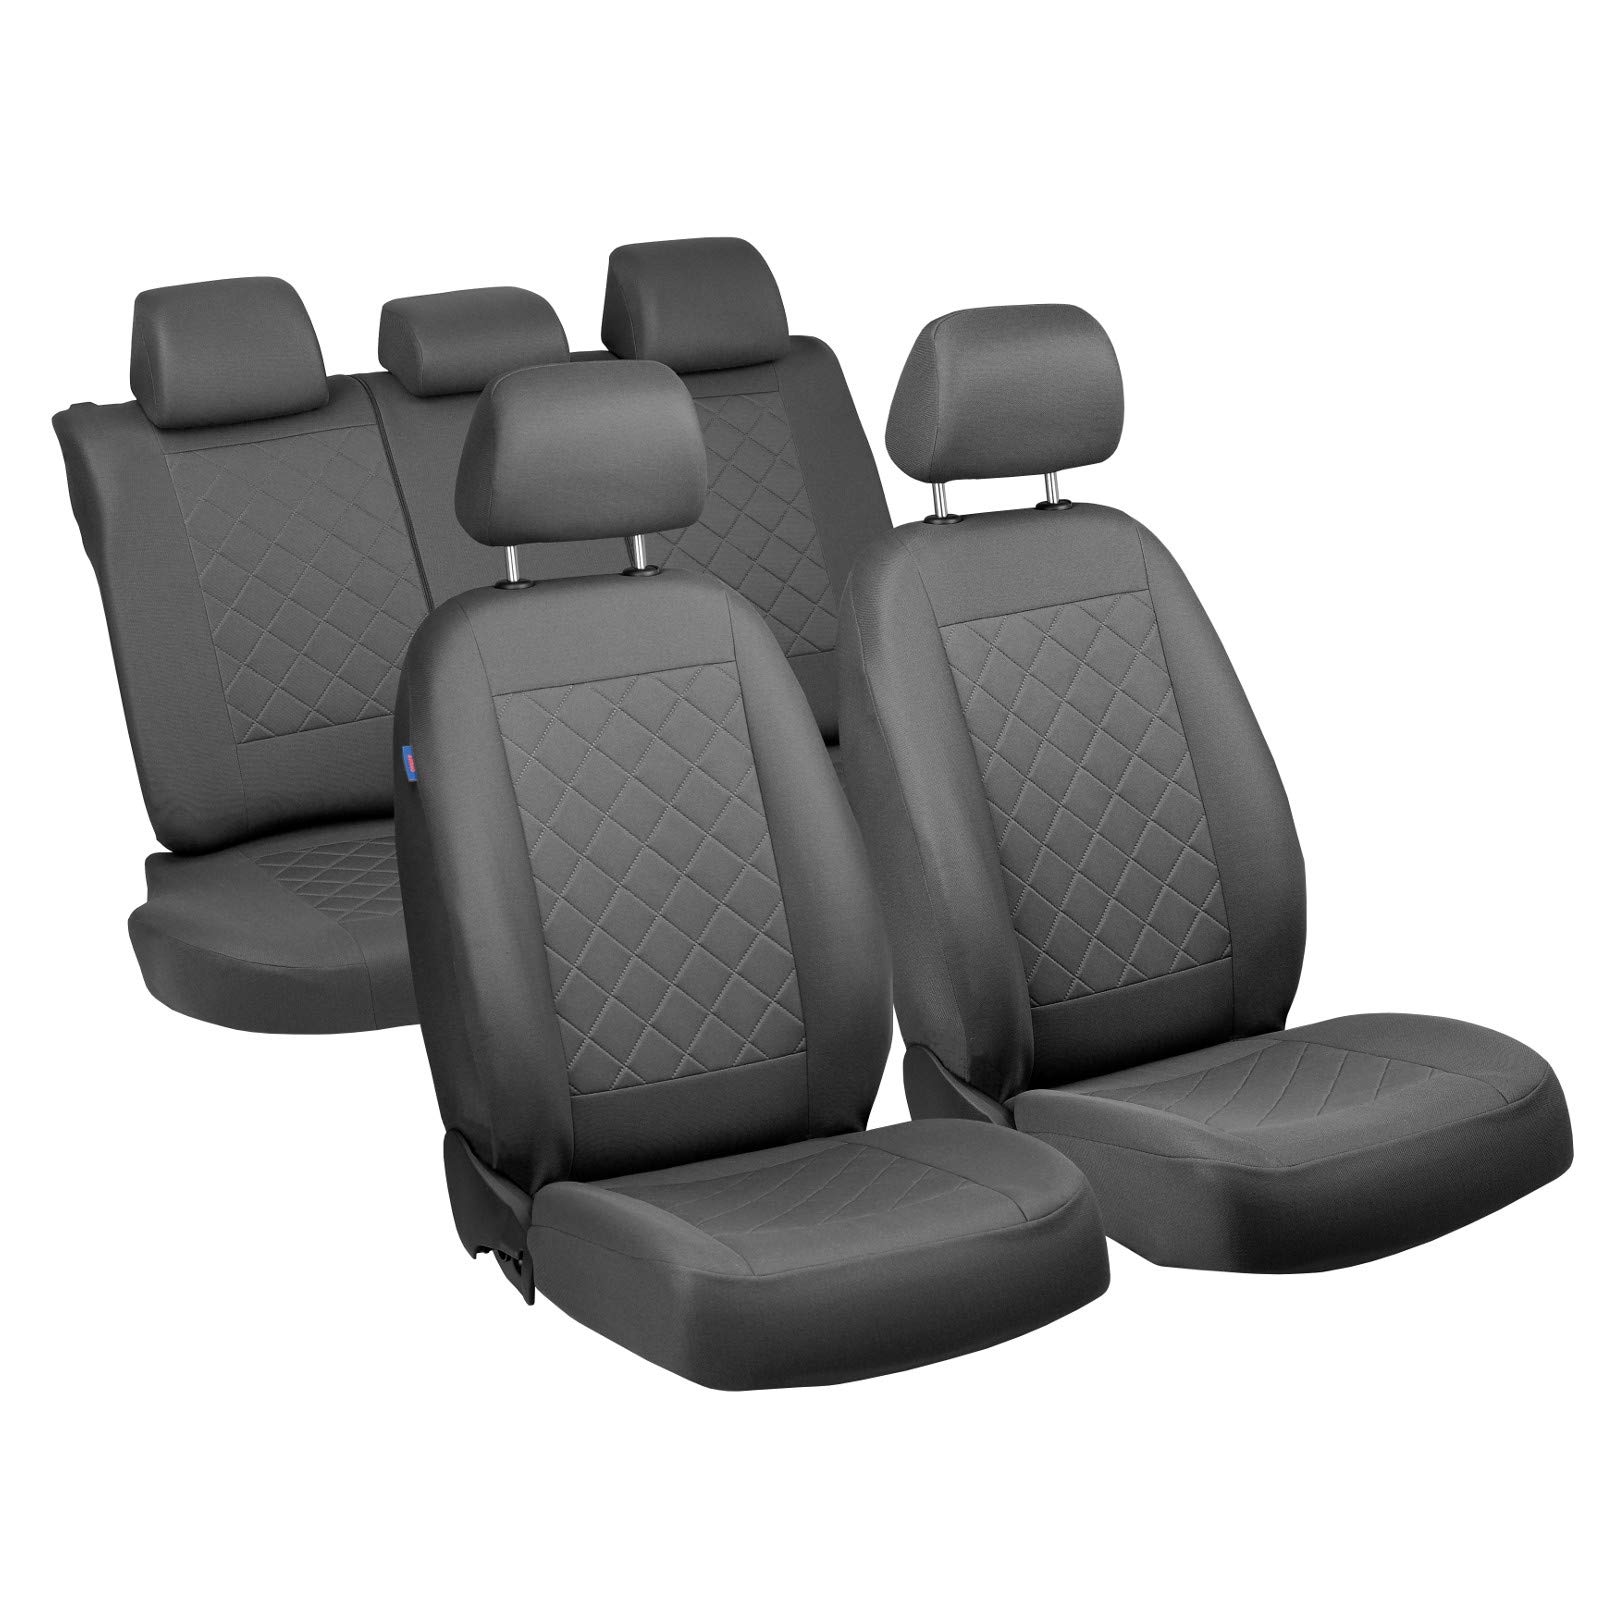 C5 Sitzbezüge - 1 Set - Farbe Premium Grau Gepresstes Karomuster